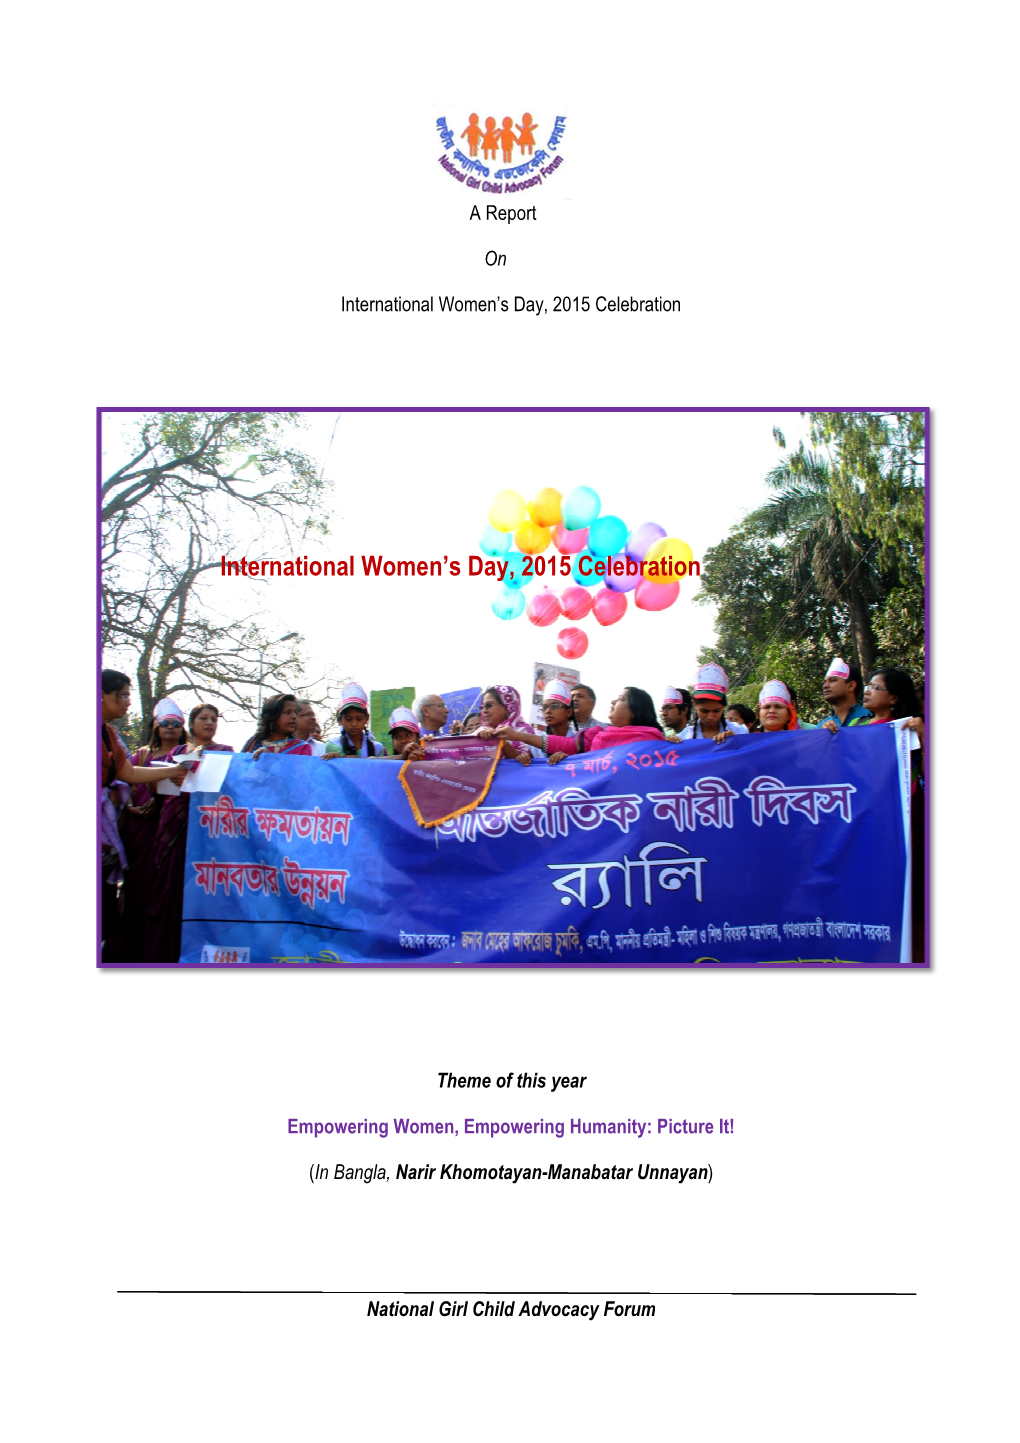 A Report on International Women's Day, 2015 Celebration